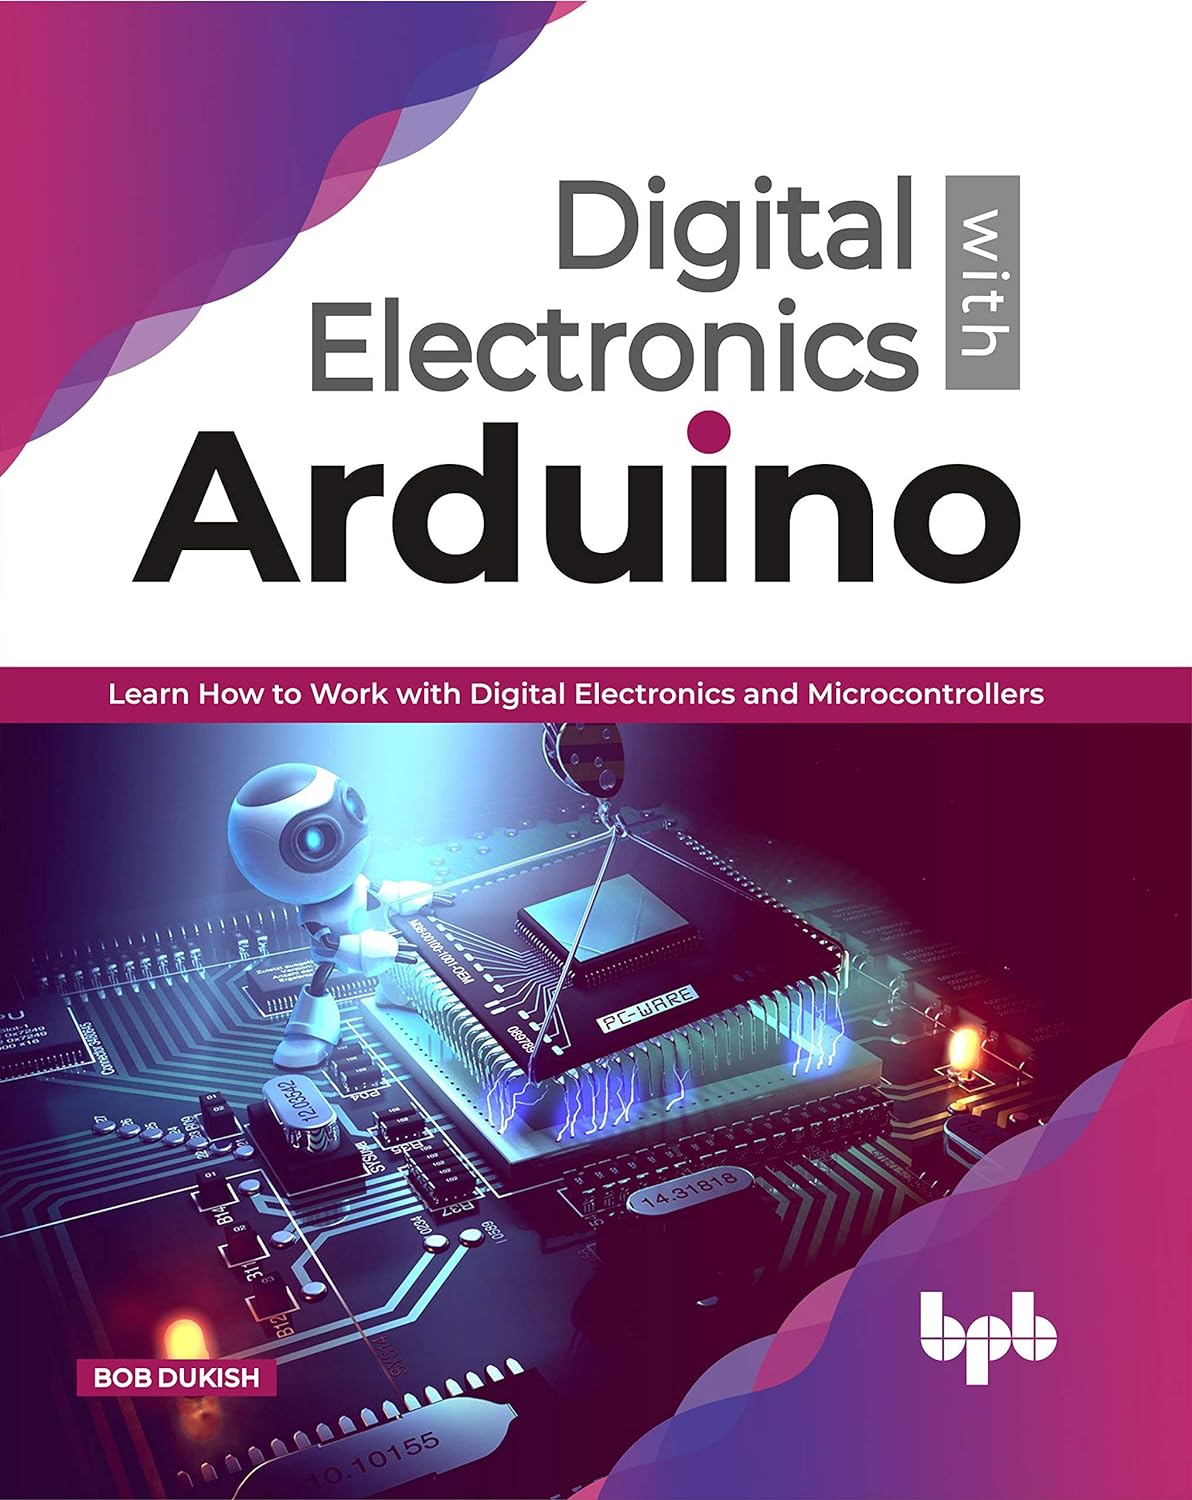 Digital Electronics with Arduino: Learn How To Work With Digital Electronics And Microcontrollers by Bob Dukish